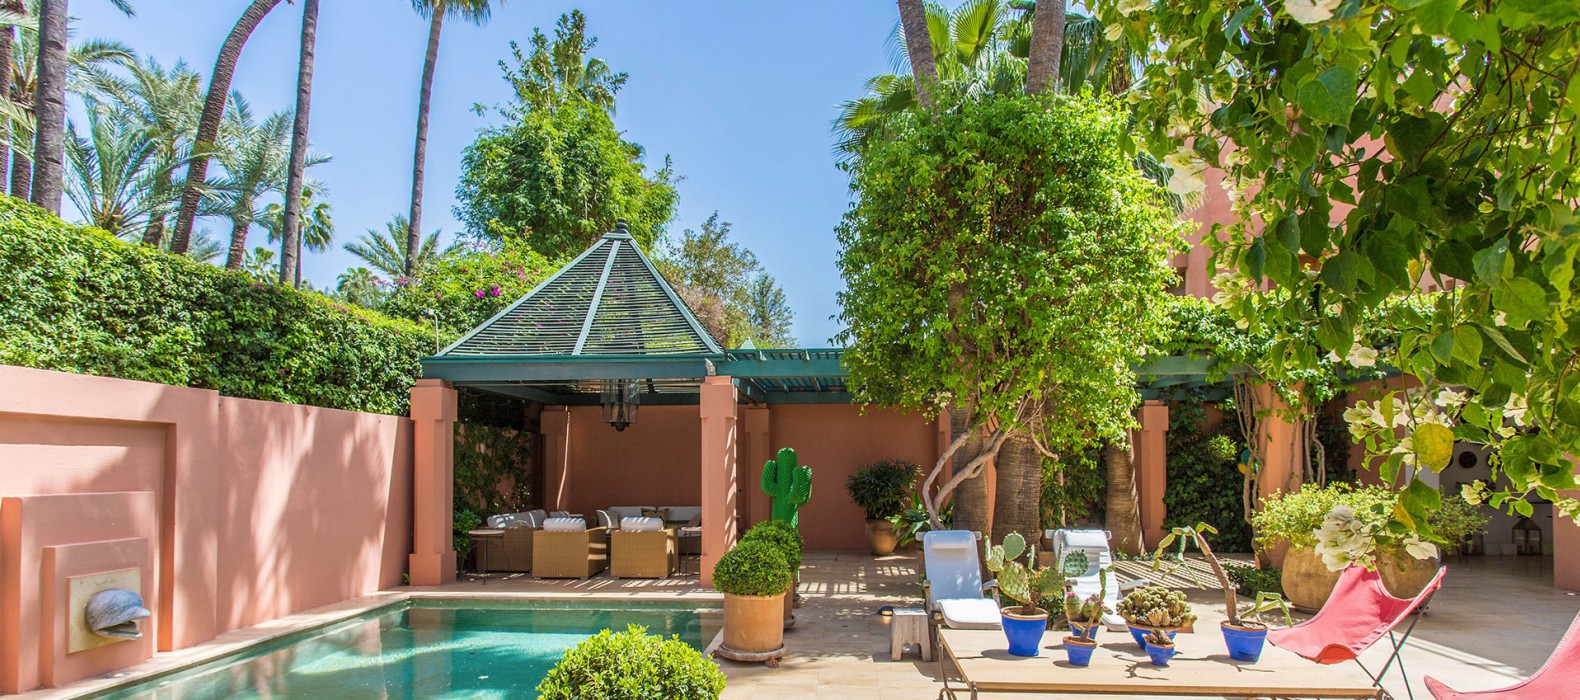 Pool area of Villa Nour in Marrakech